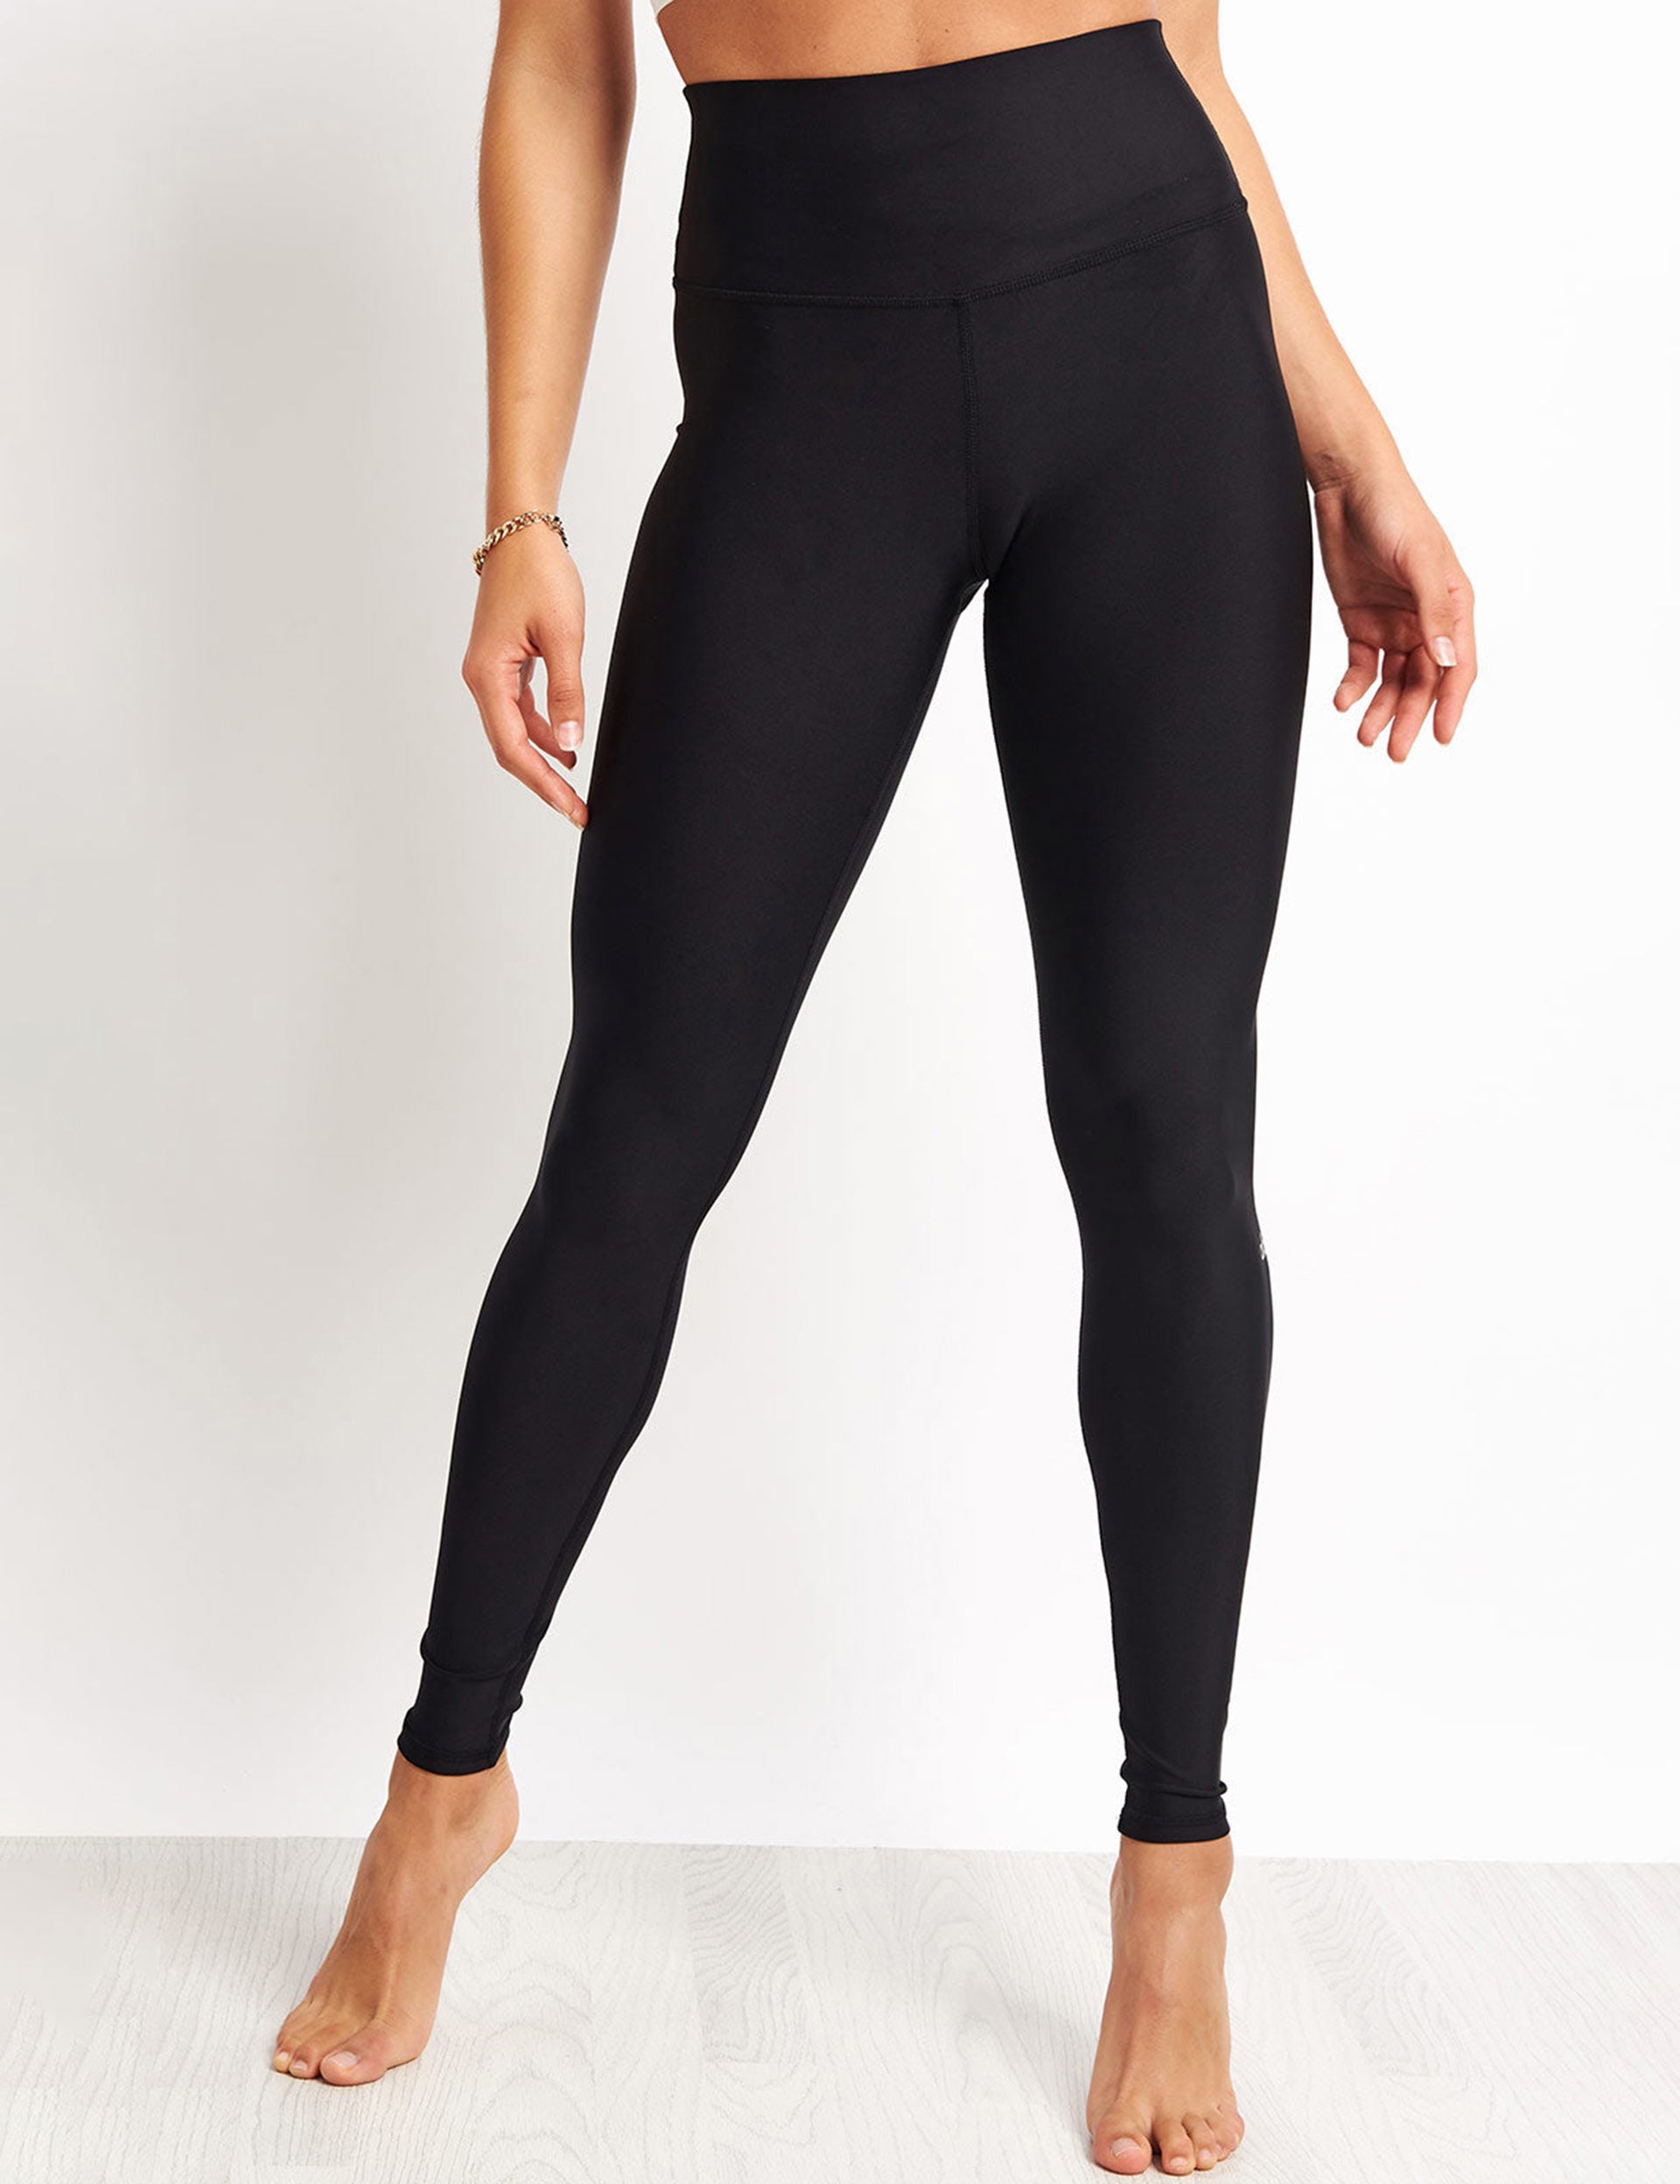 High Waisted Yoga Pants for Women Leggings Black Yoga Pants Size XL